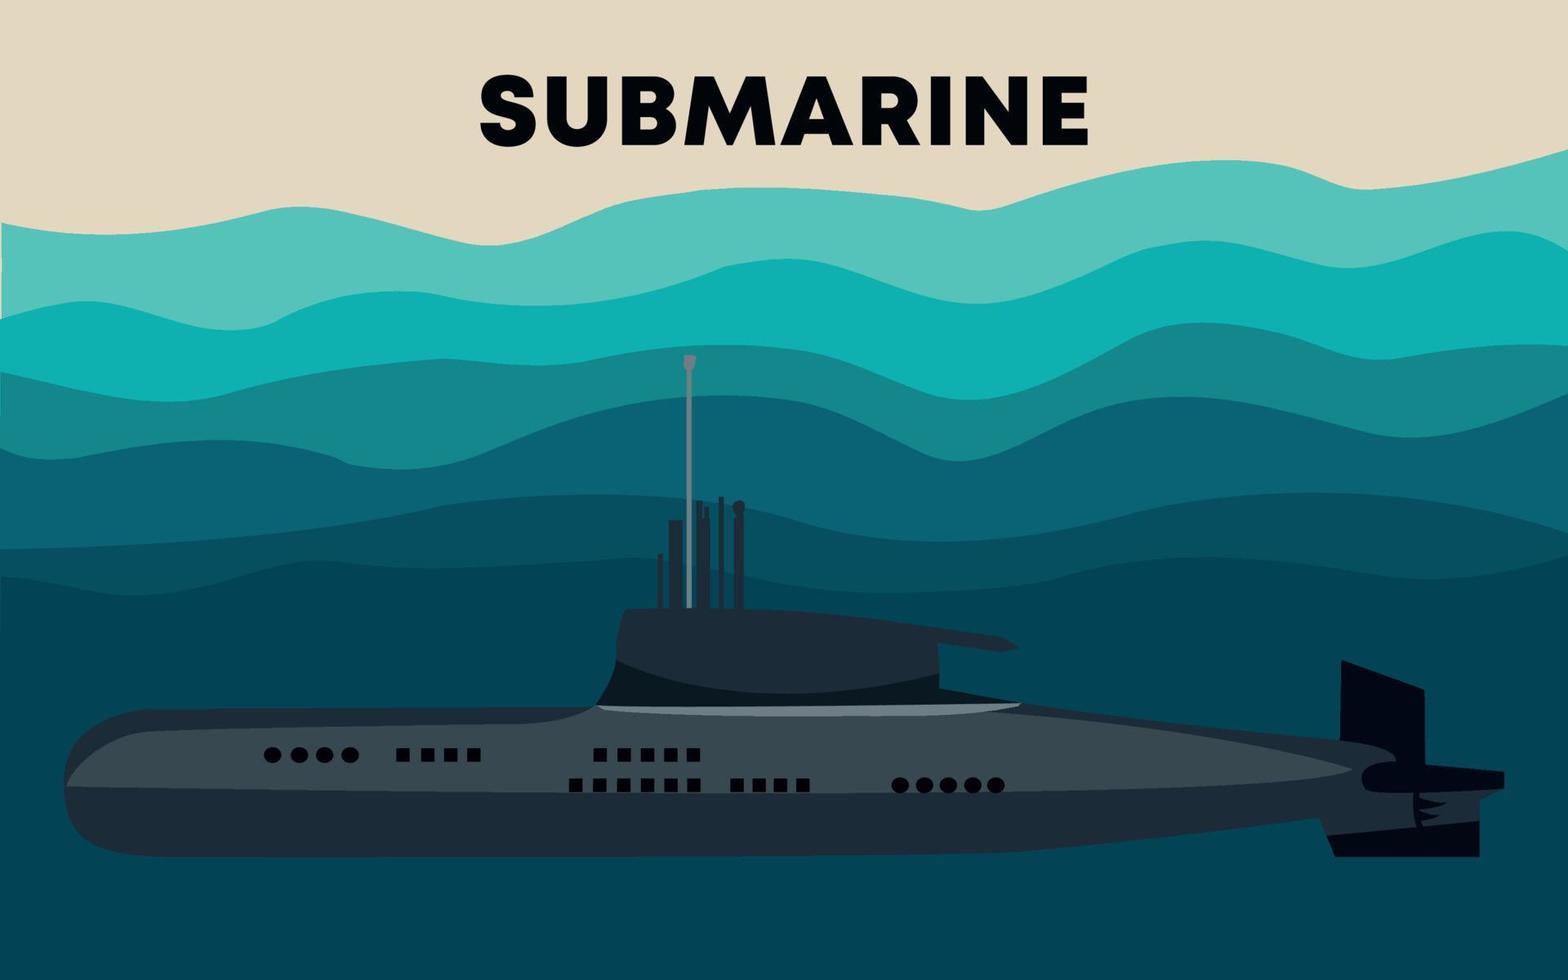 Militär-U-Boot unter den Meereswellen Vektorgrafiken Ozean background.eps vektor